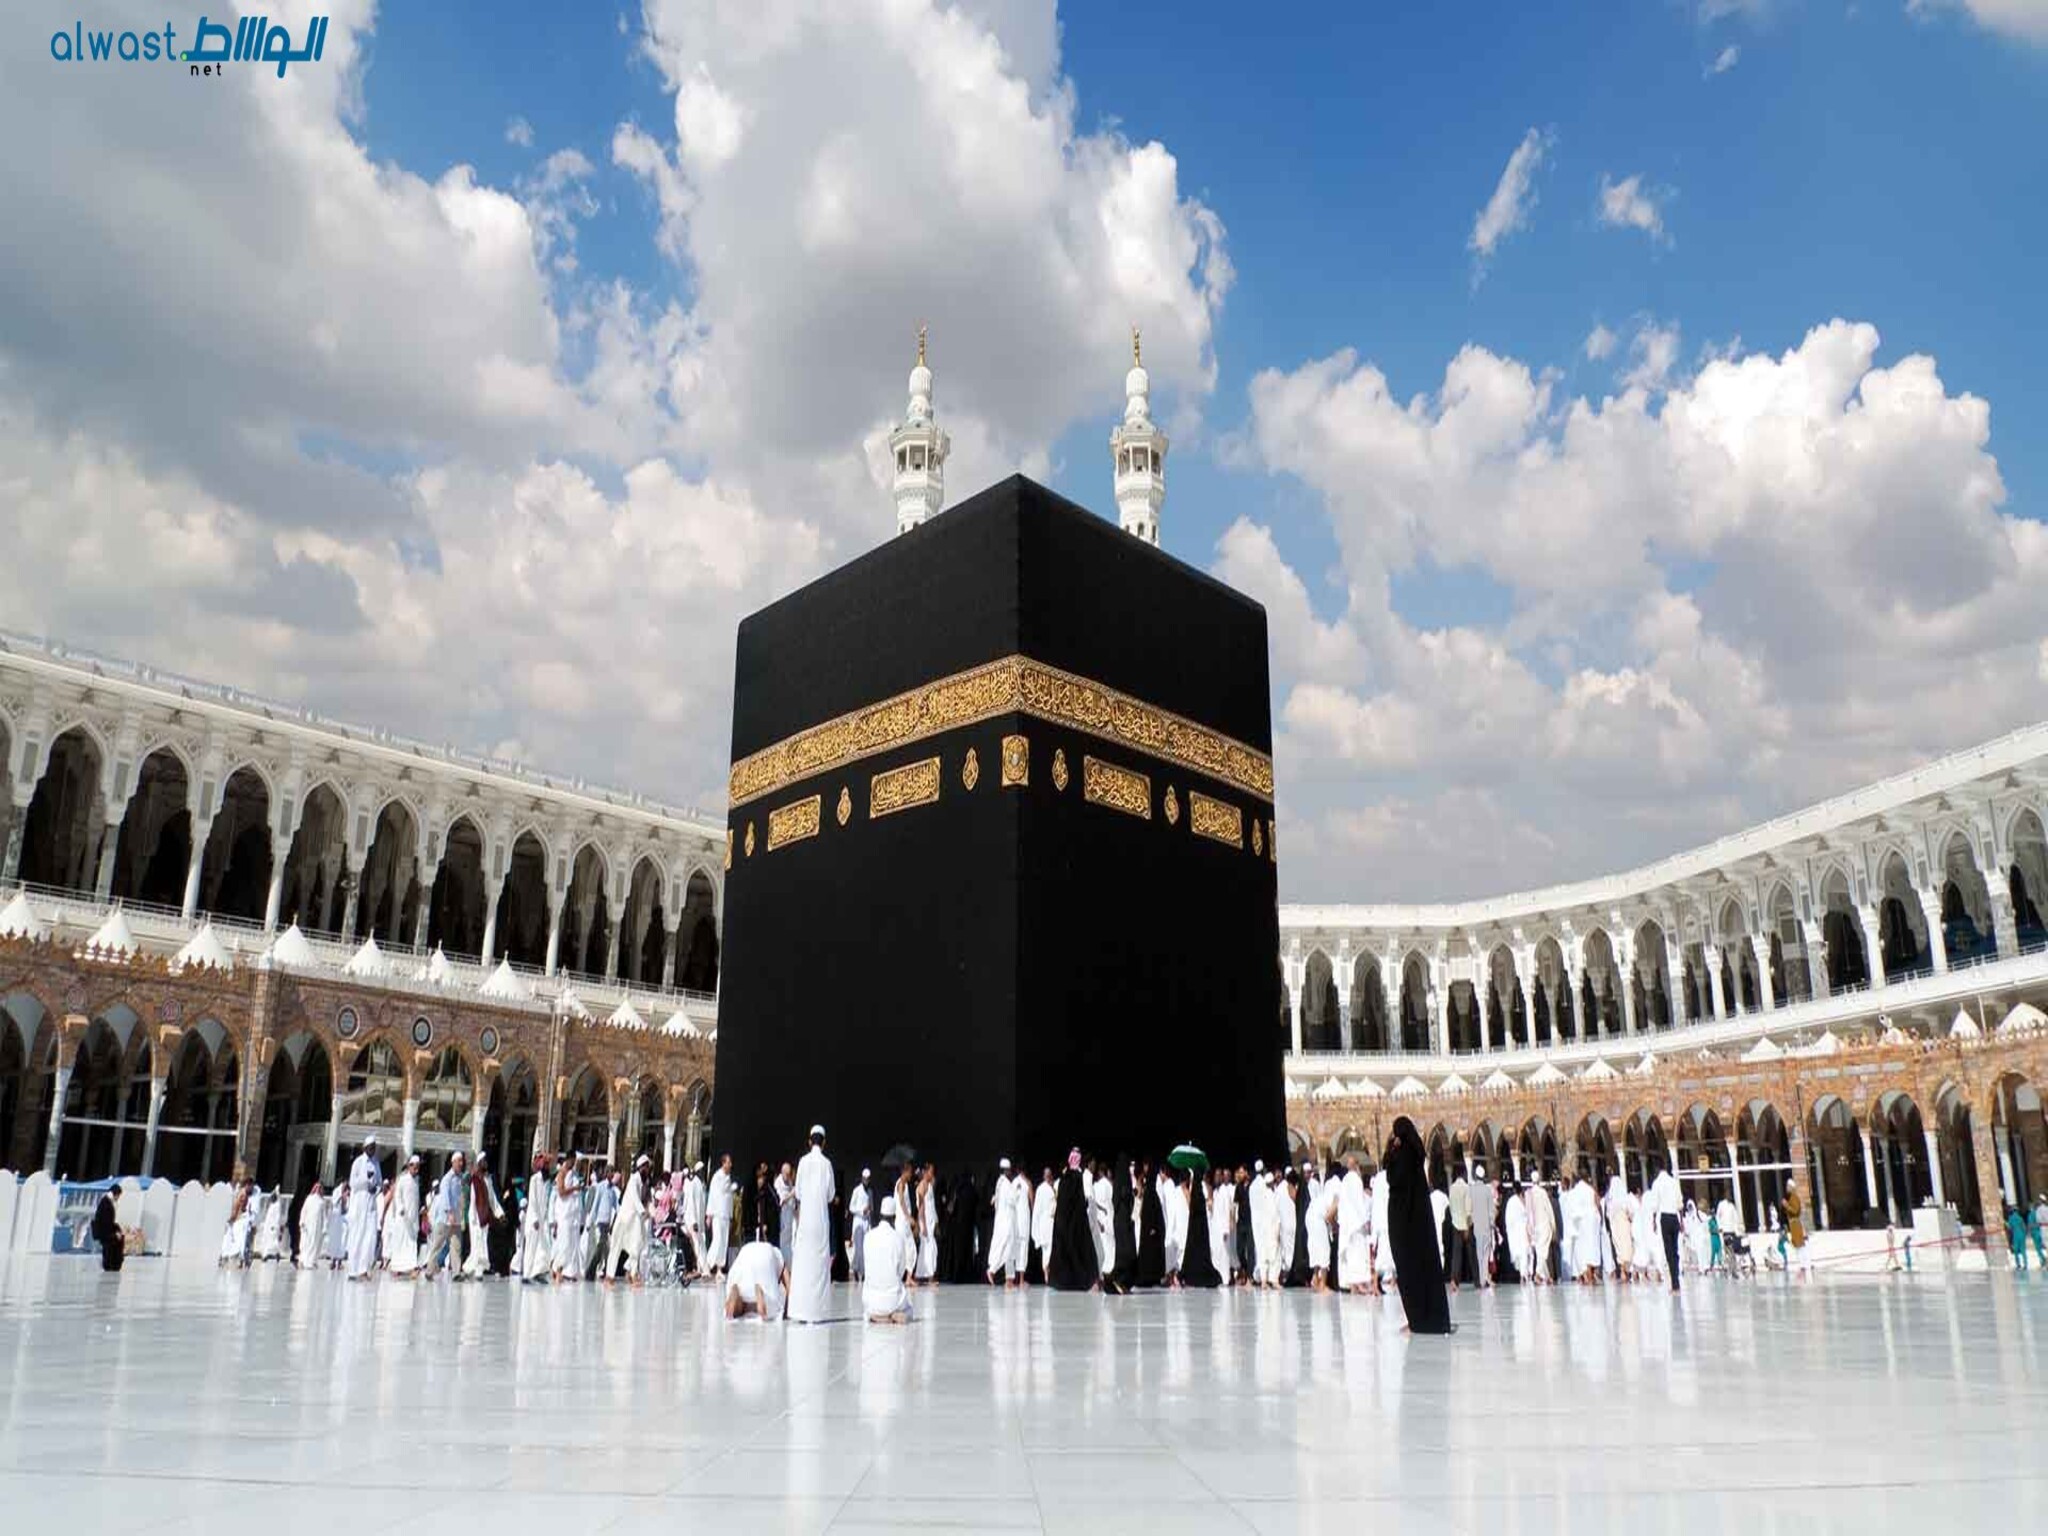 Saudi Arabia urges businesses to apply for Hajj licenses to assist pilgrims